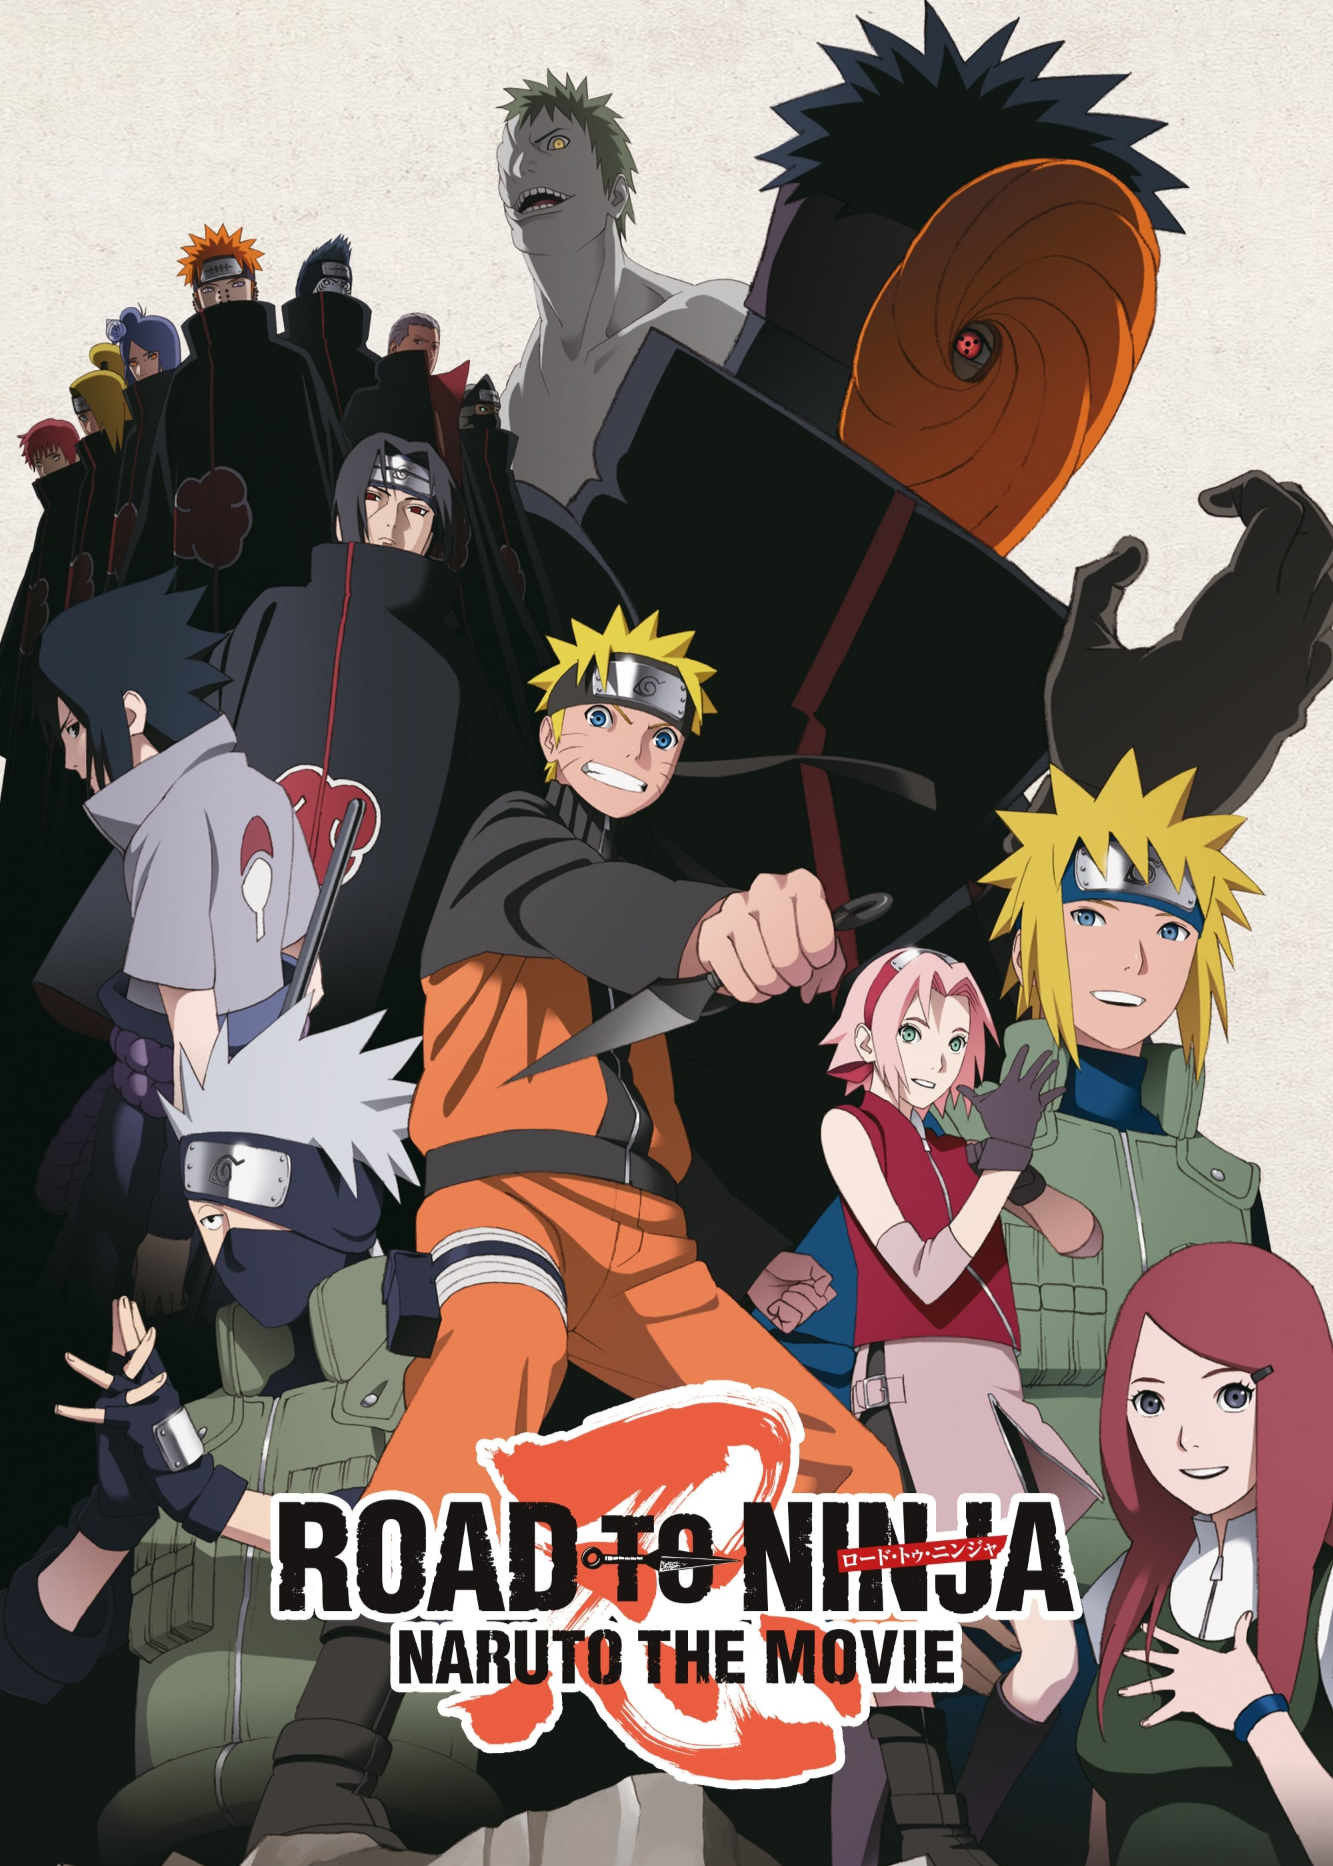 Road to Ninja: Naruto the Movie (Road to Ninja: Naruto the Movie) [2012]